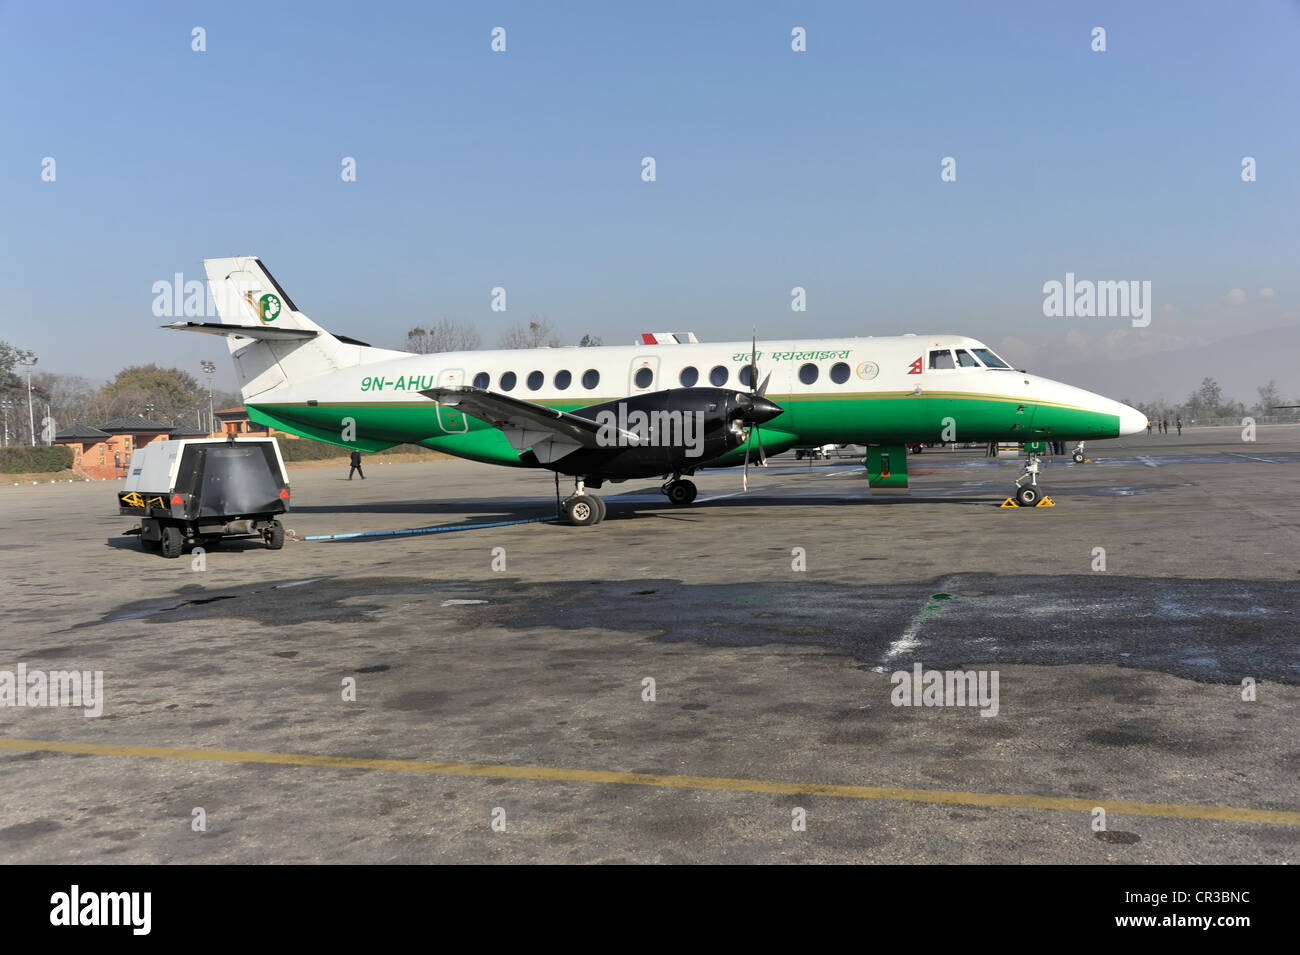 Yeti Airlines aeromobili per un volo panoramico, Kathmandu, Nepal, Asia Foto Stock